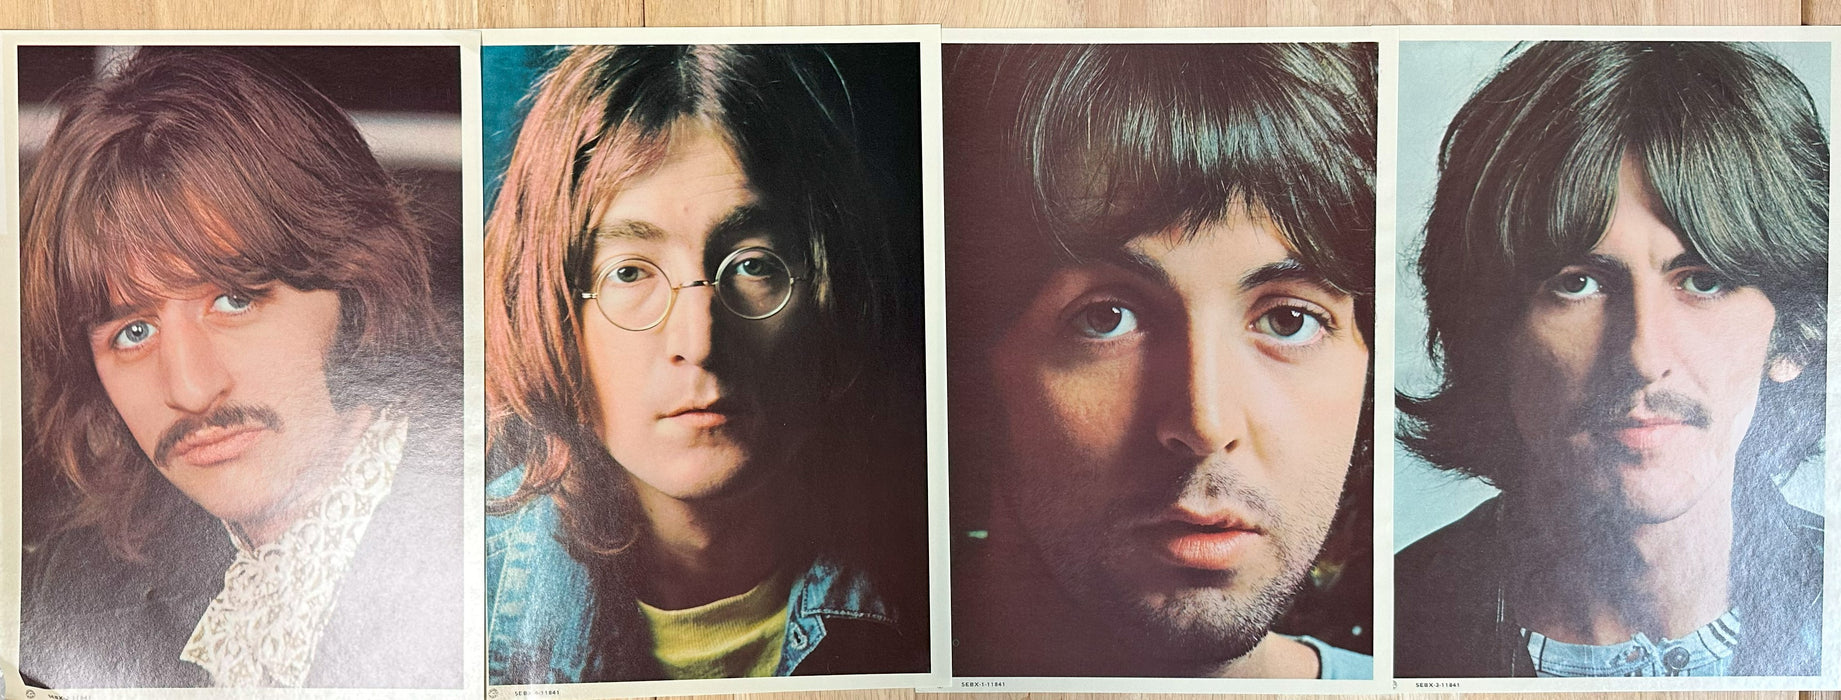 The Beatles - Vinyl Bundle #23